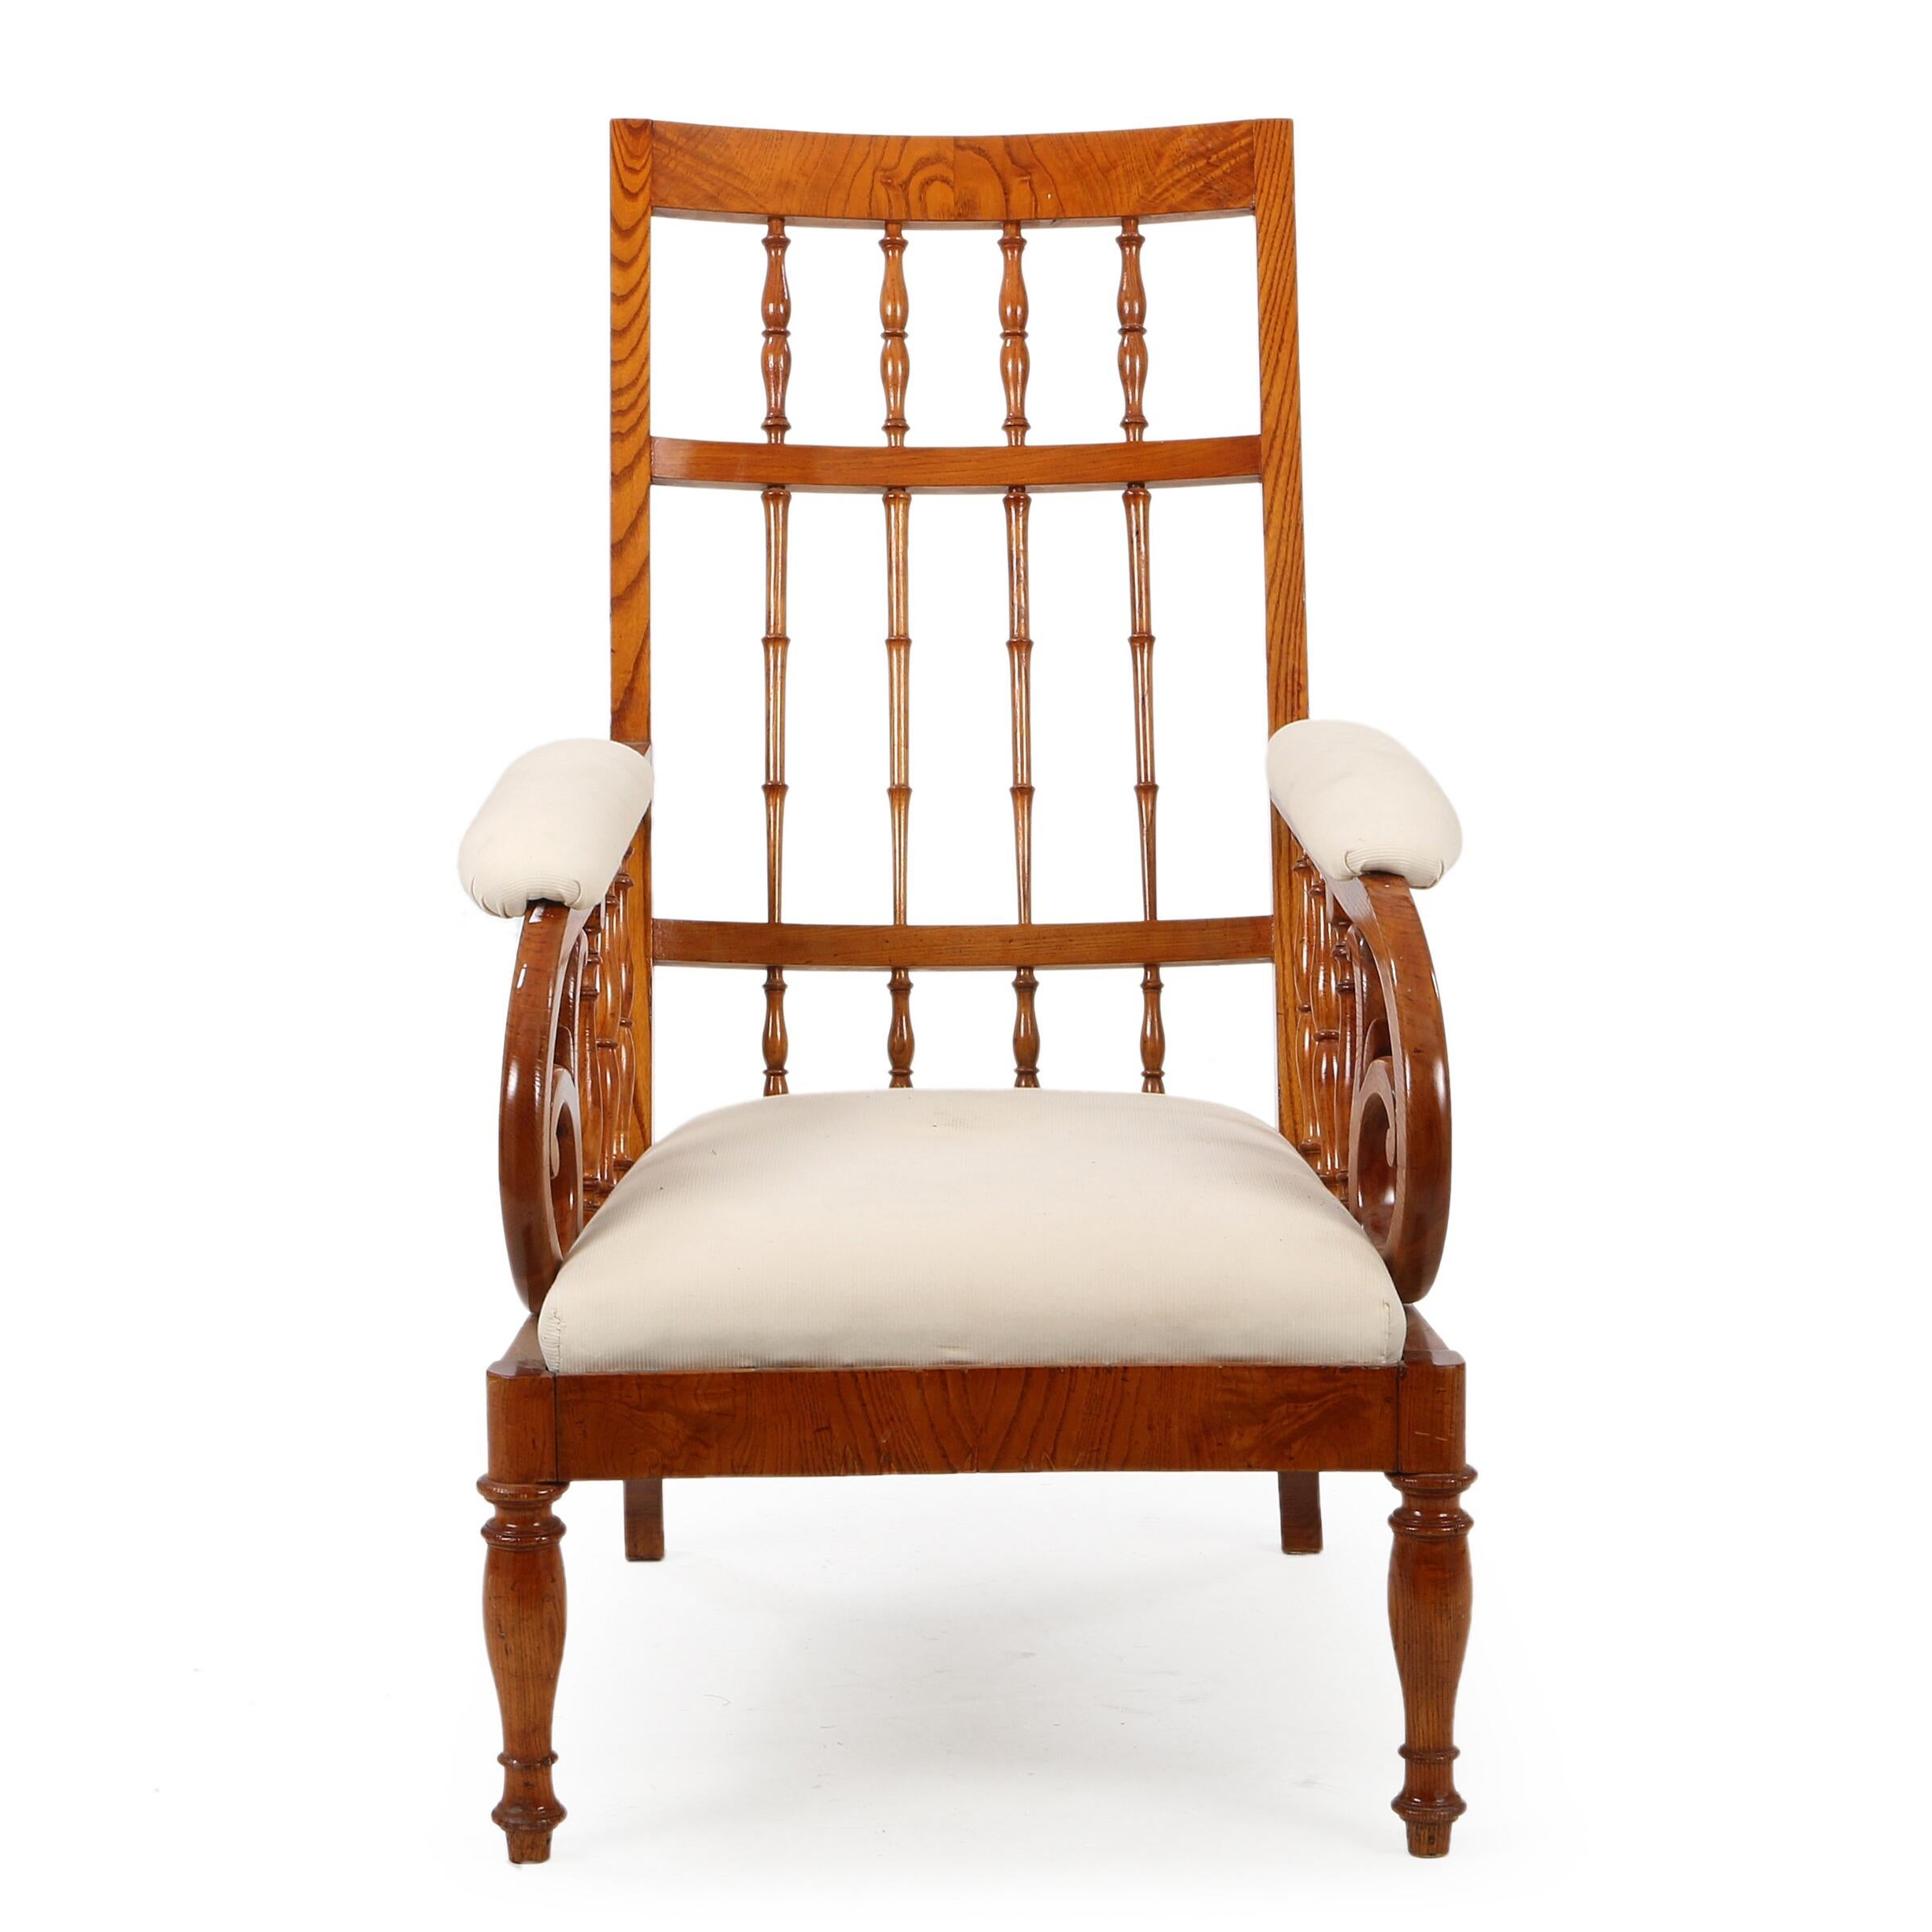 An elegant and comfortable Danish late Empire elmwood resting chair, circa 1840.